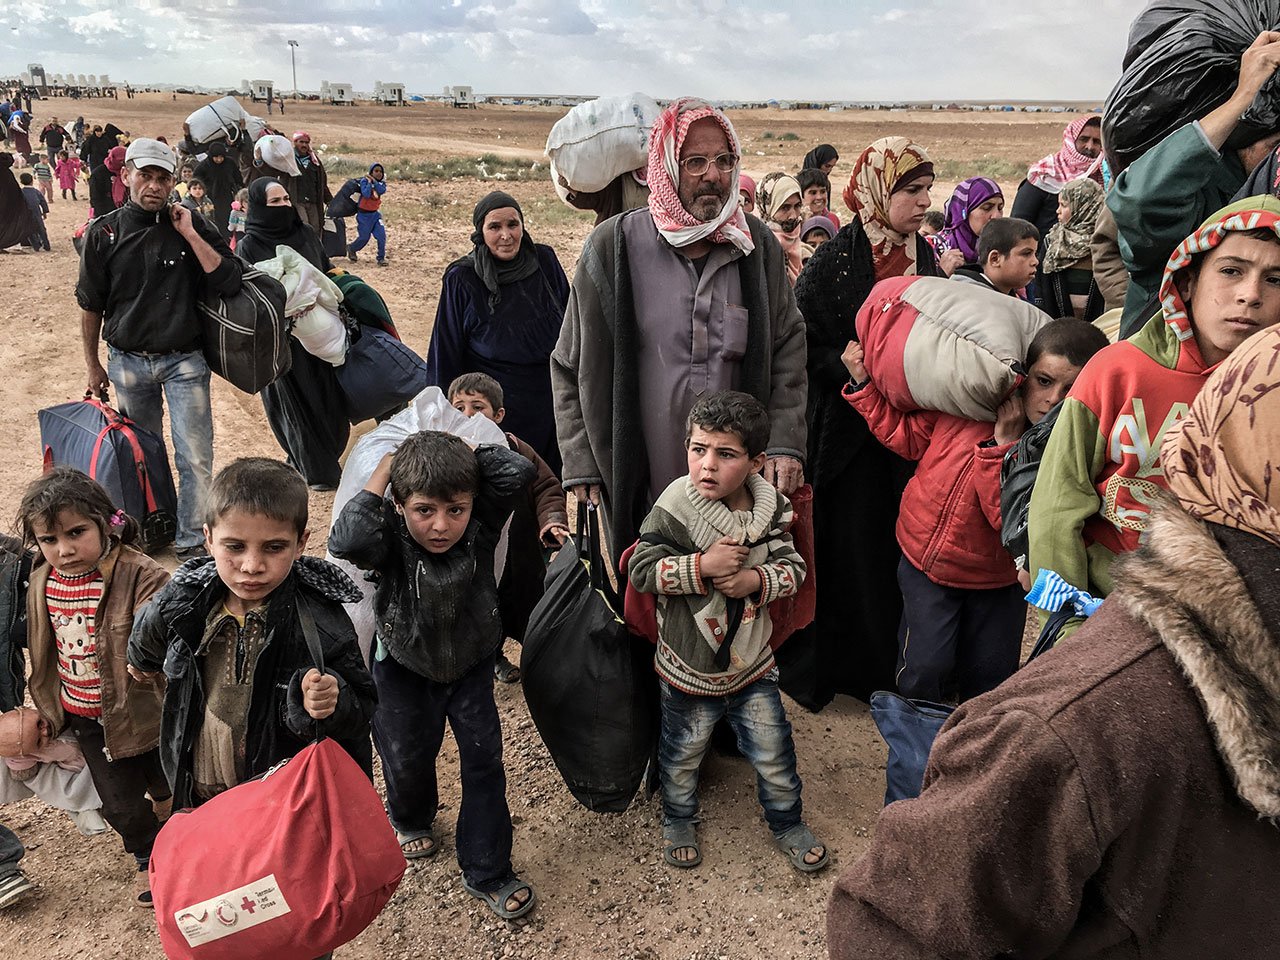 Refugees at the Jordanian Syrian border in HUMAN FLOW, an Amazon Studios release. Photo courtesy of Amazon Studios.